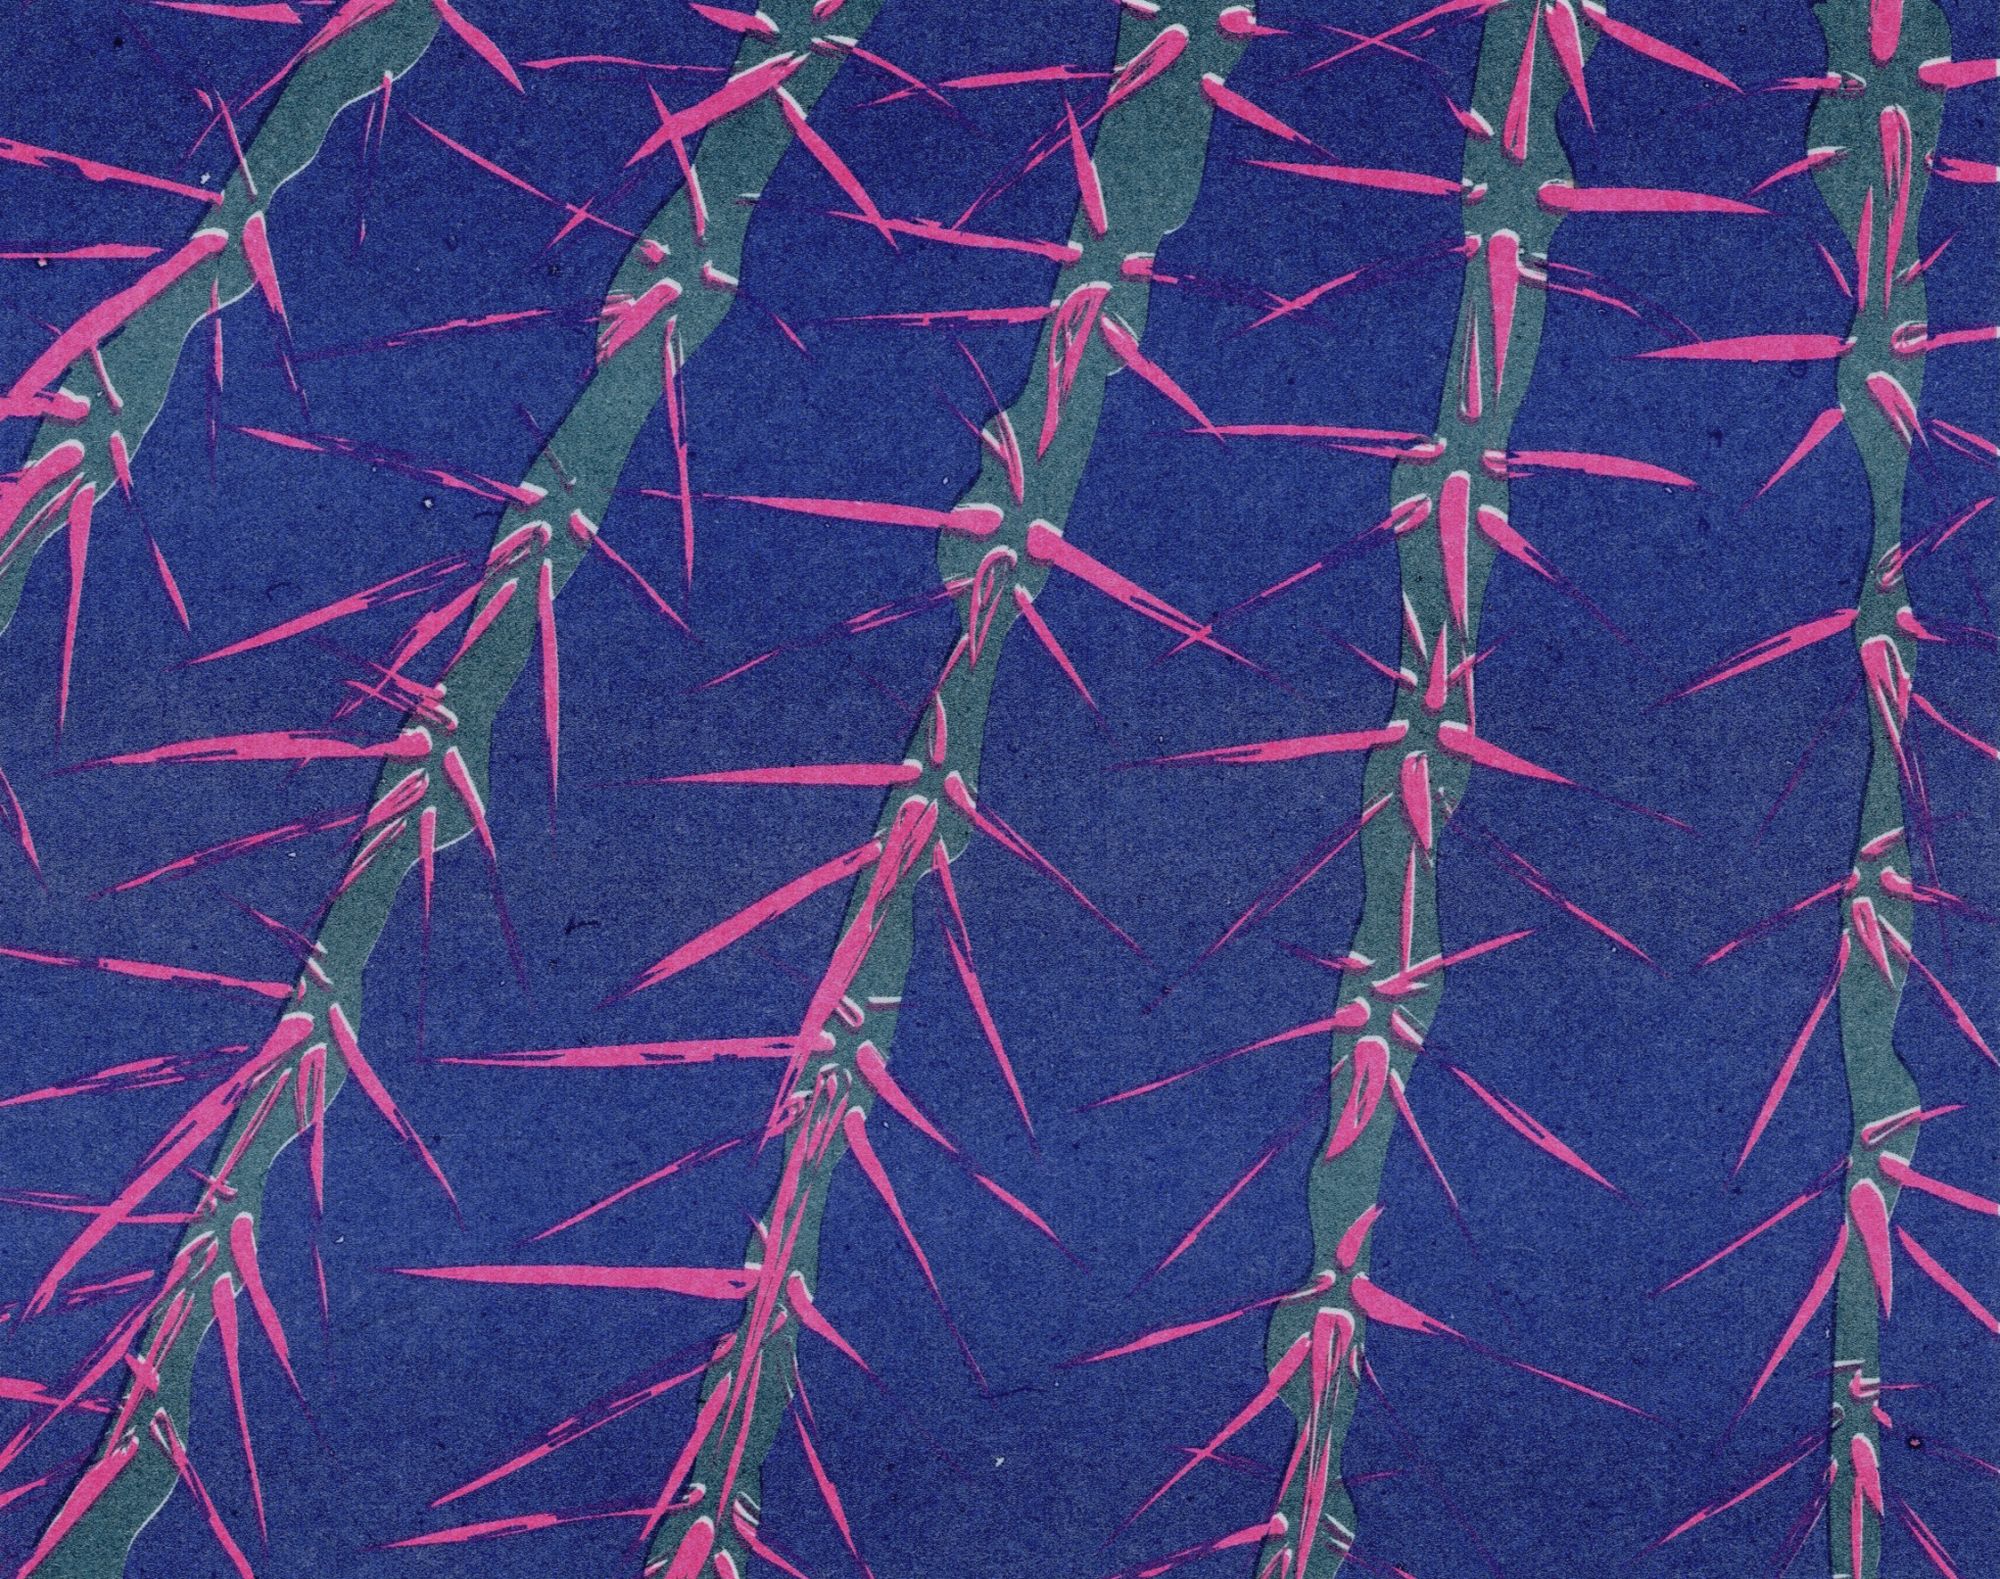 Echniocactus Grusonii, Destina Atasayar